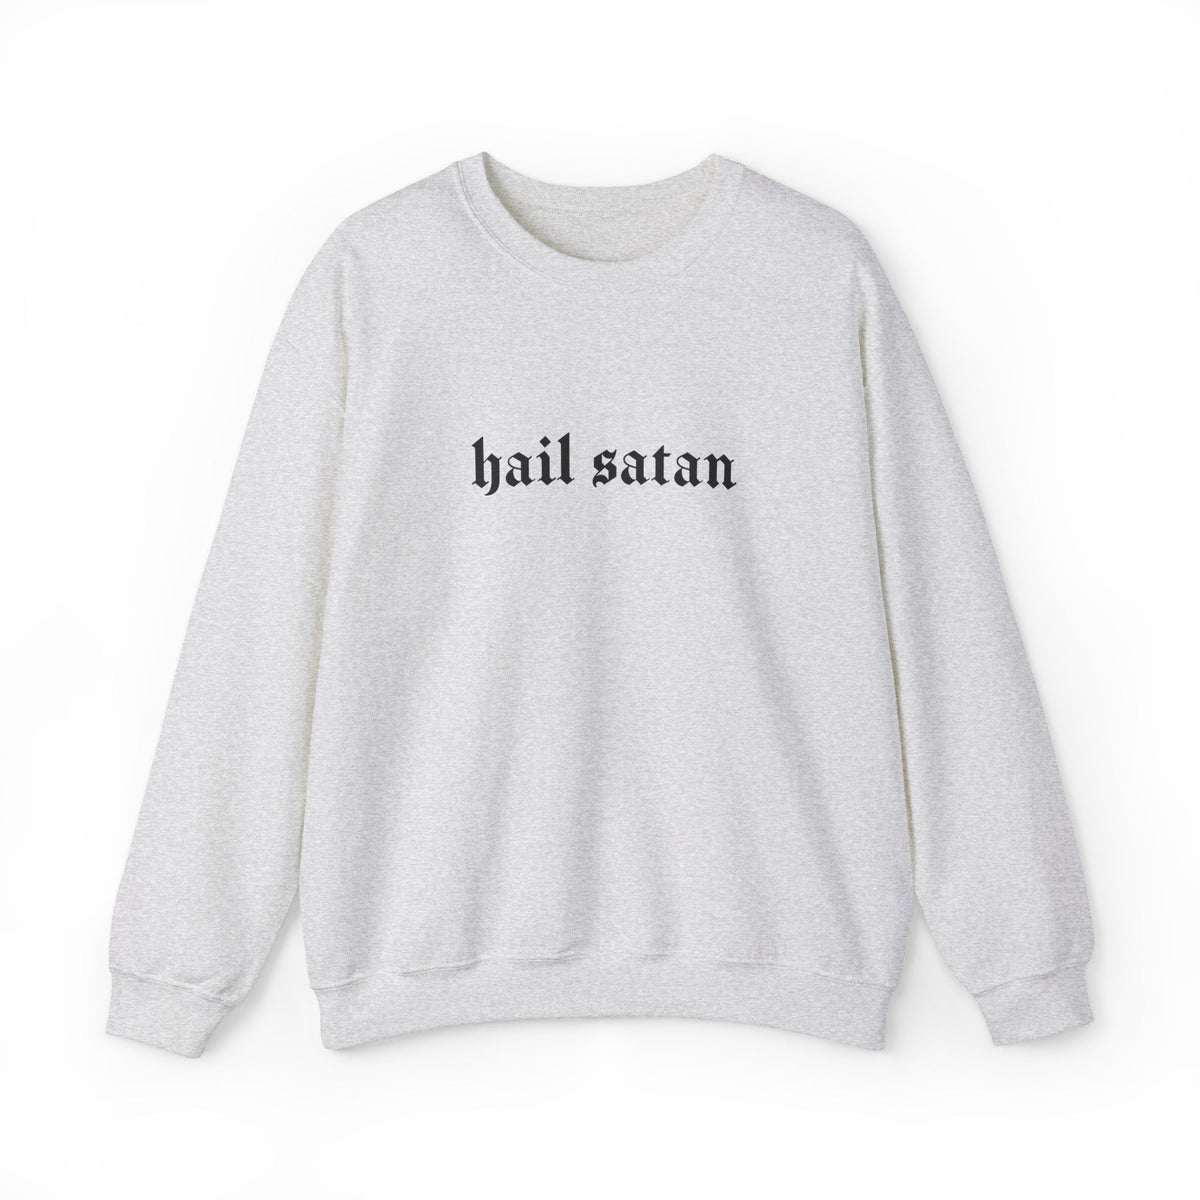 Hail Satan Goth Long Sleeve Crew Neck Sweatshirt - Goth Cloth Co.Sweatshirt71824355377132405442